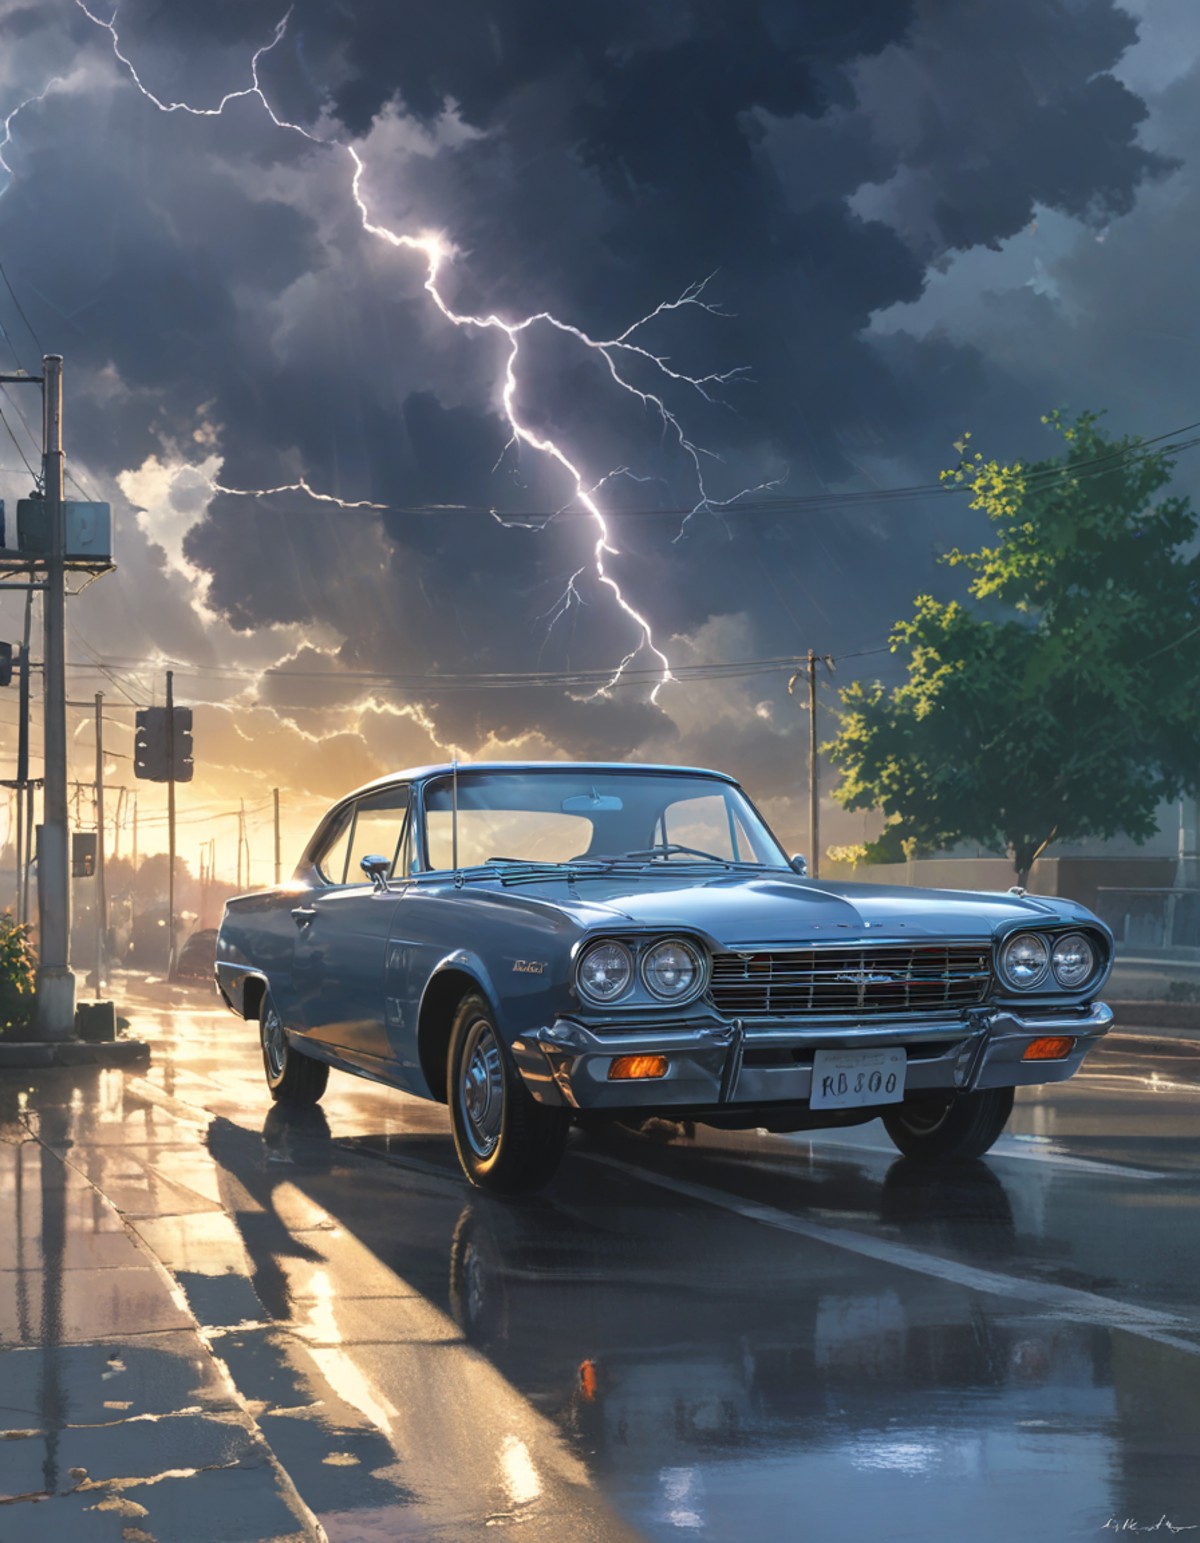 (lightning storm), Vintage car, polished, Chrome gleaming in morning light, Era's moving art, by artist Makoto Shinkai